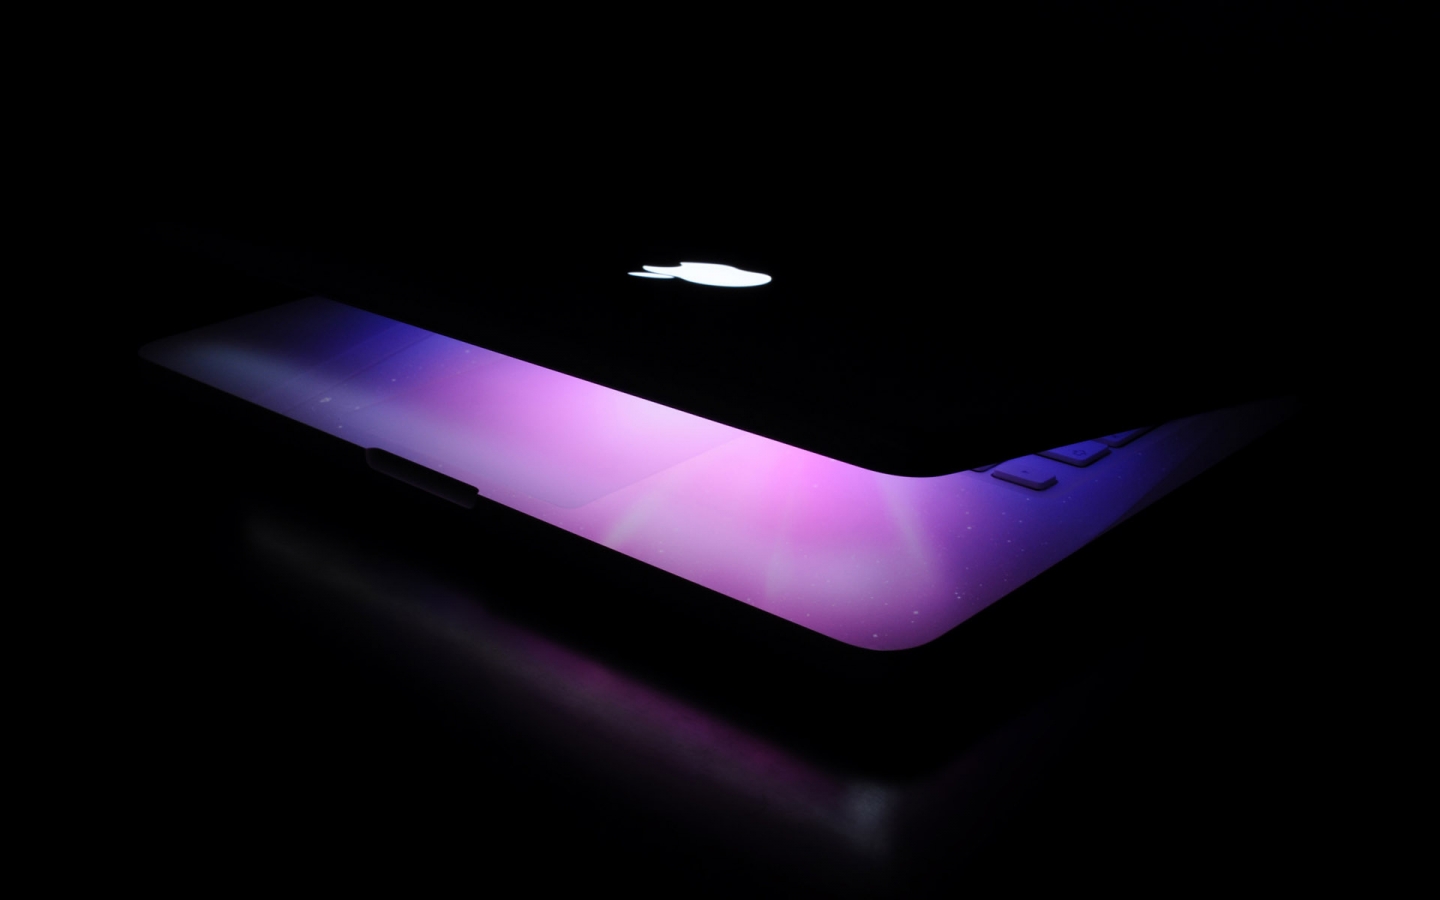 MacBook Pro Light for 1440 x 900 widescreen resolution